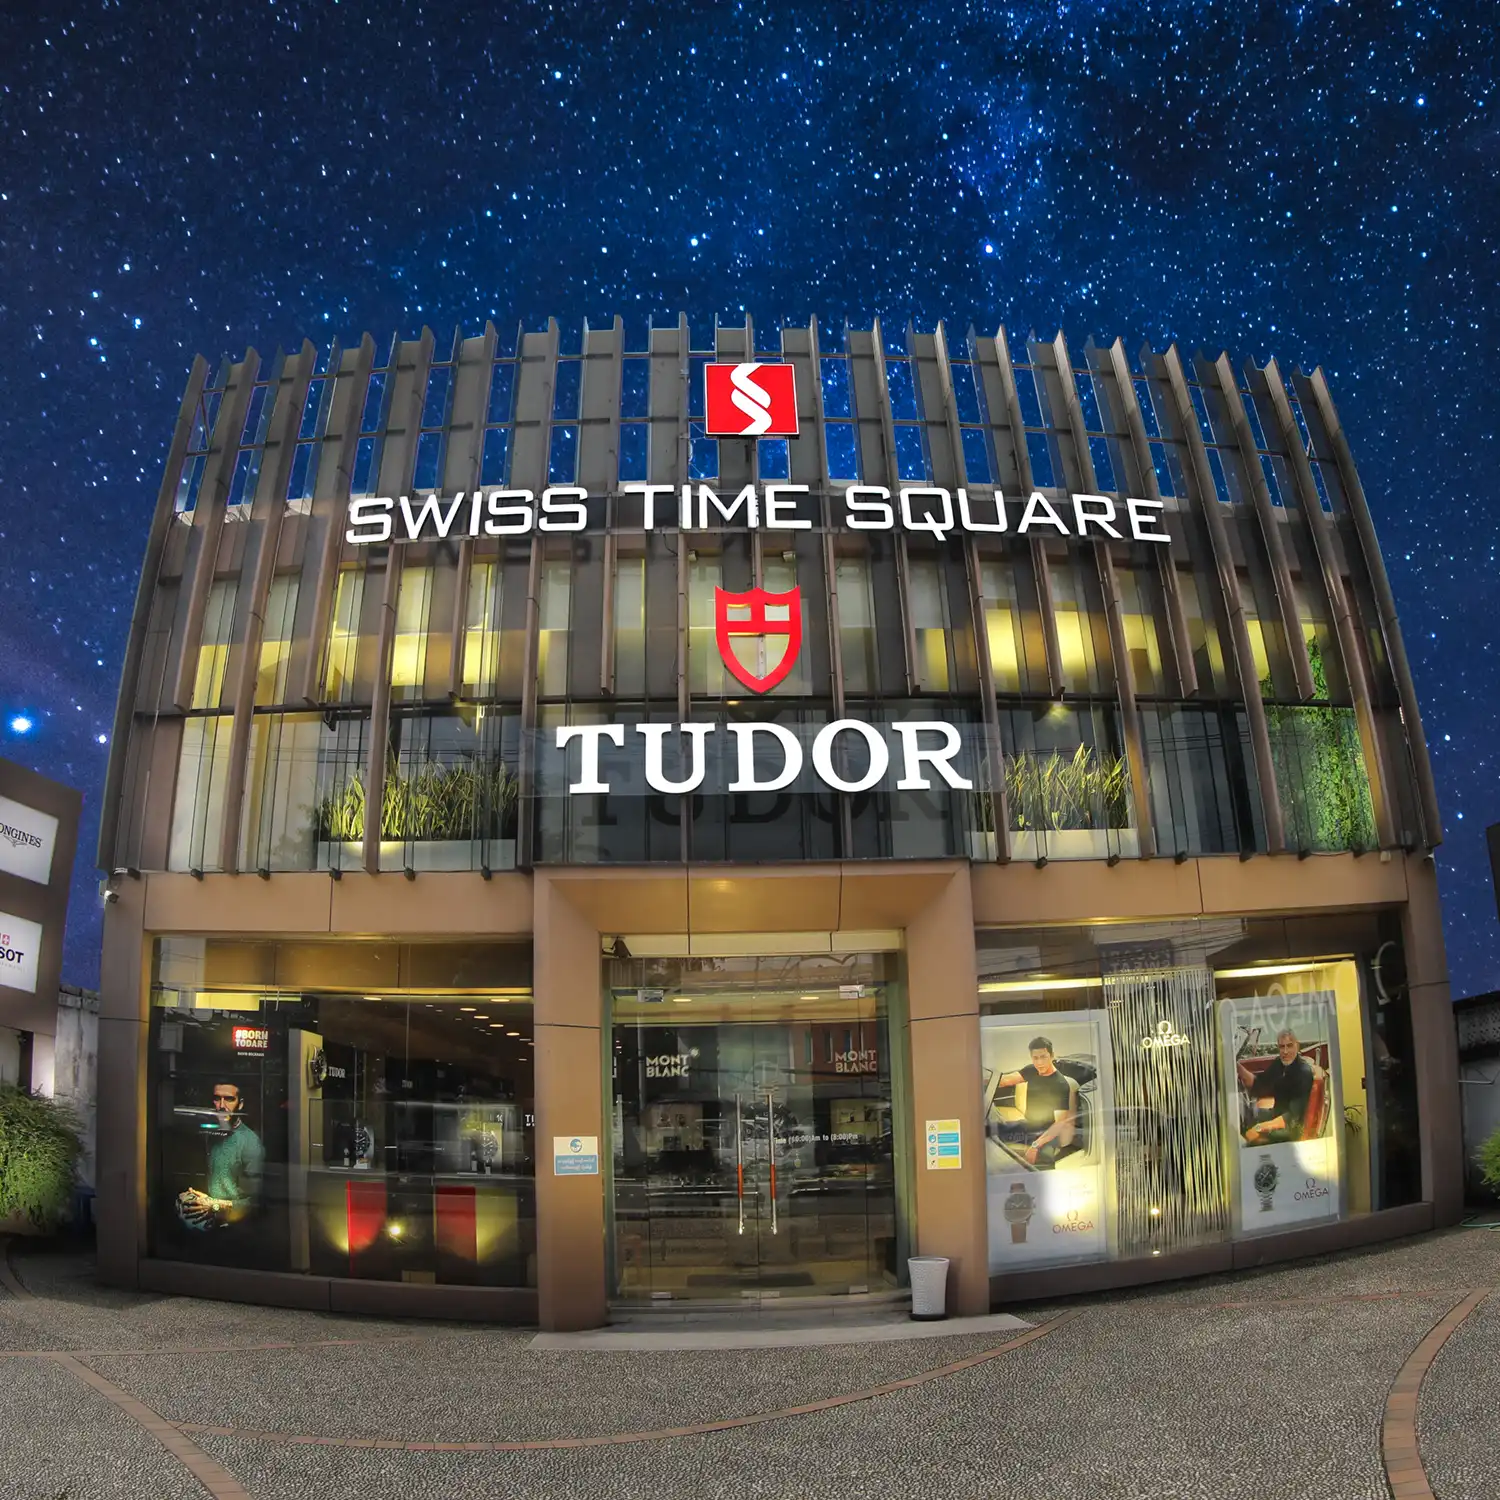 Swiss Time Square Myanmar